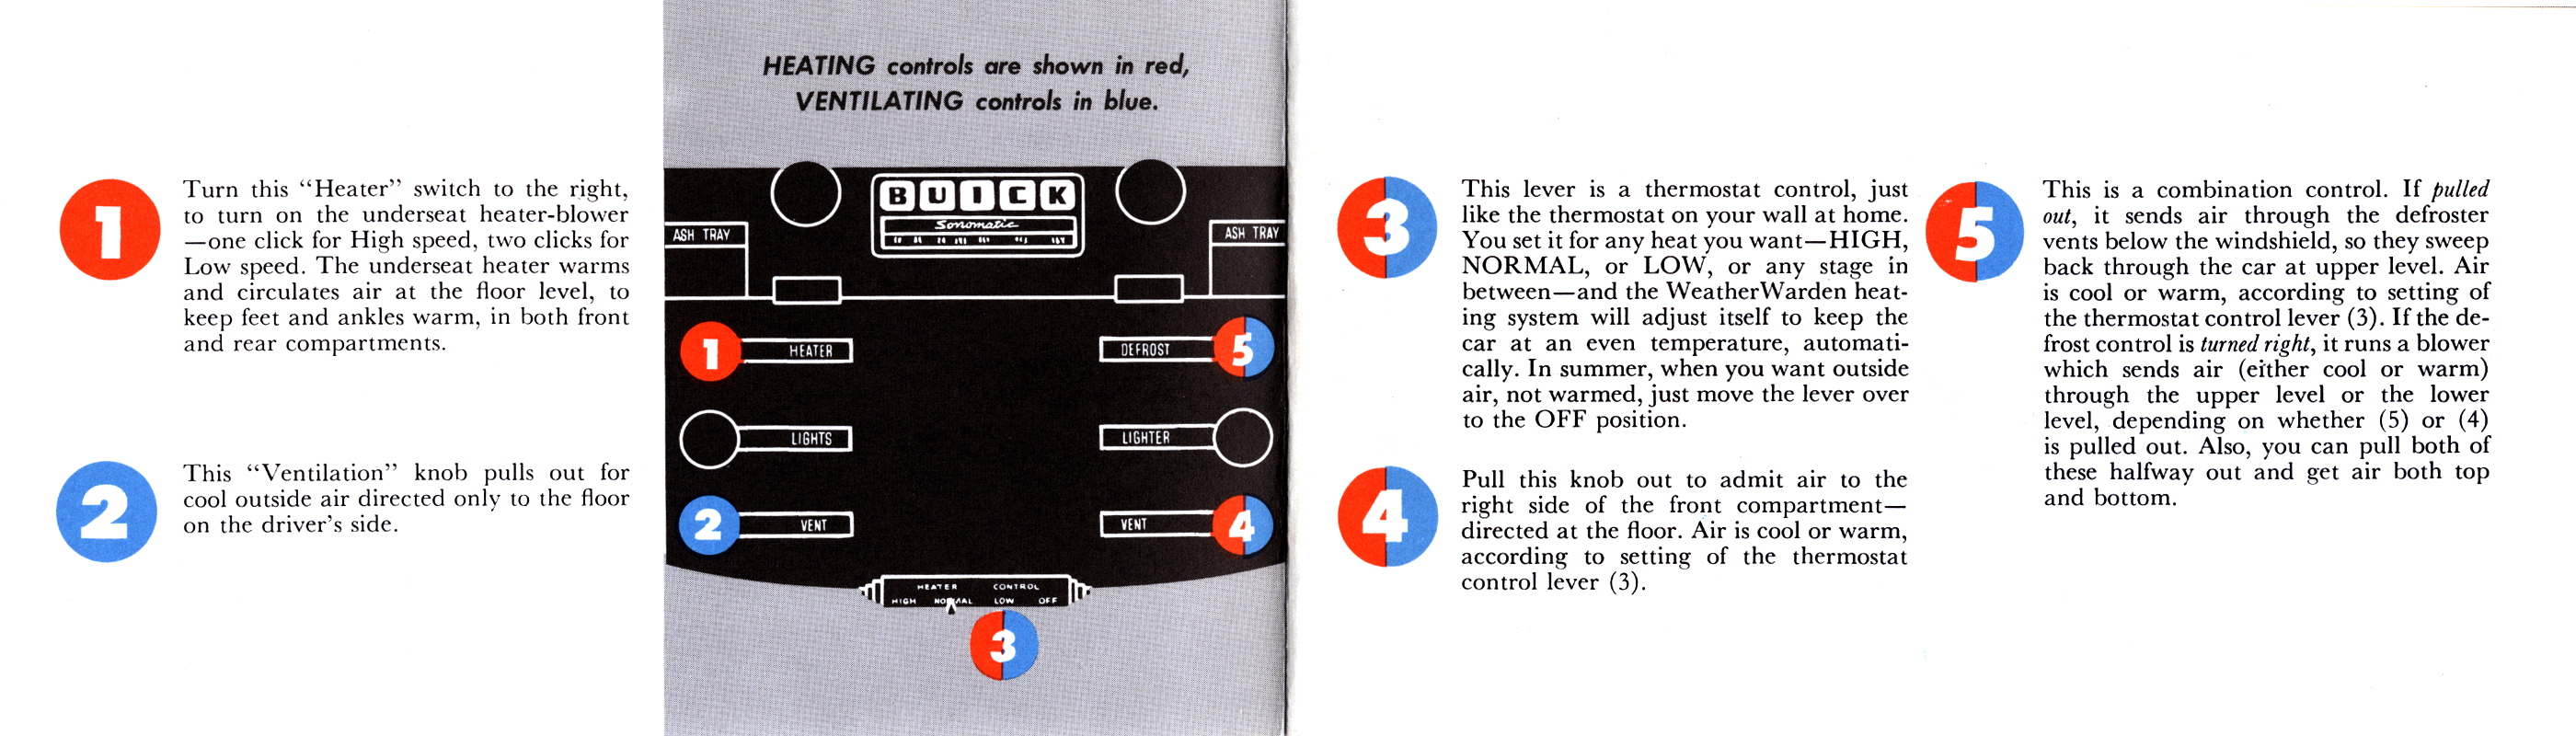 1953 Buick Heating and AC Folder-02-03